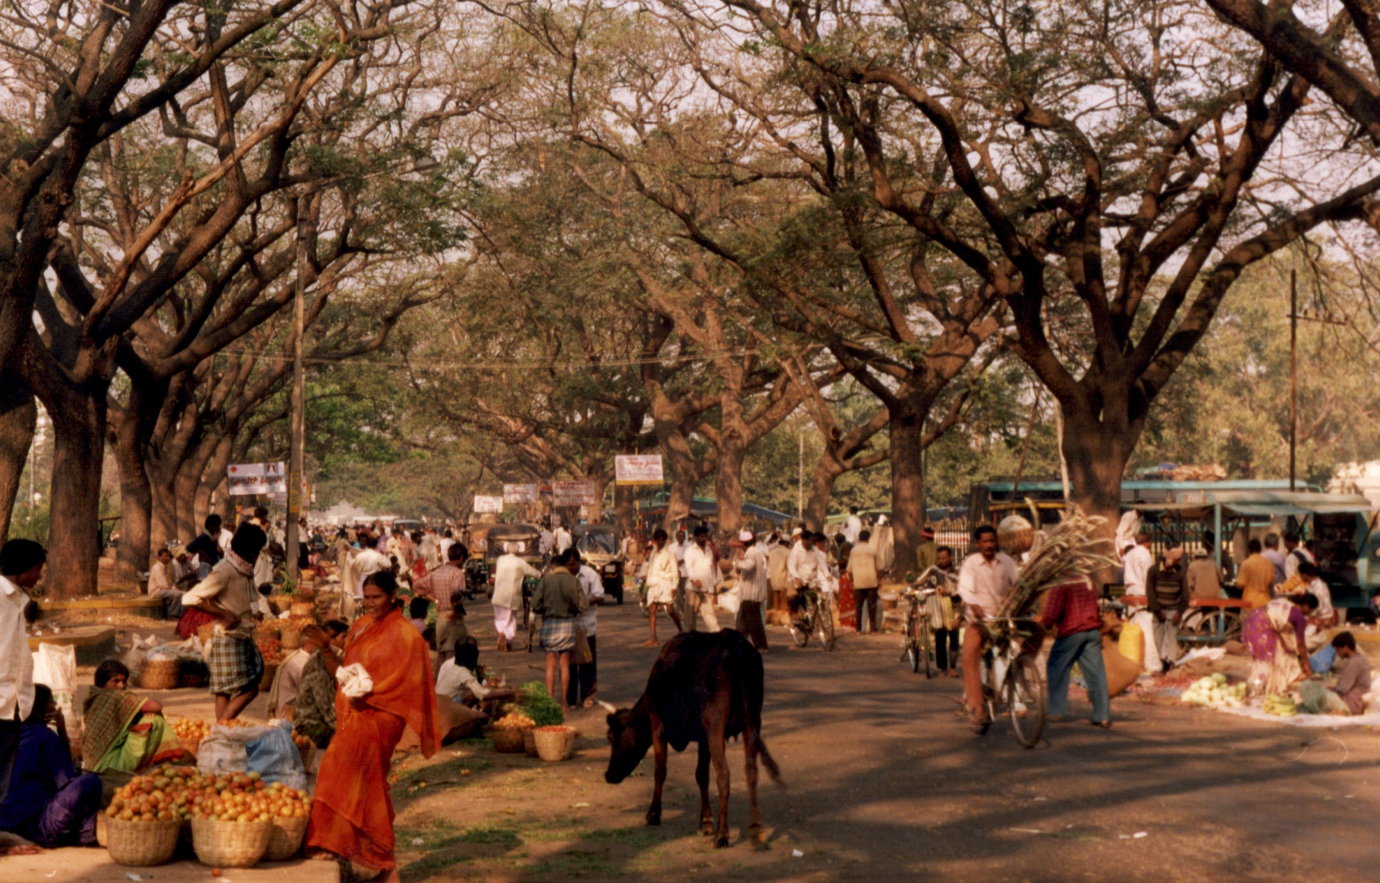 mysore-streetmarket-cow_copy.jpg